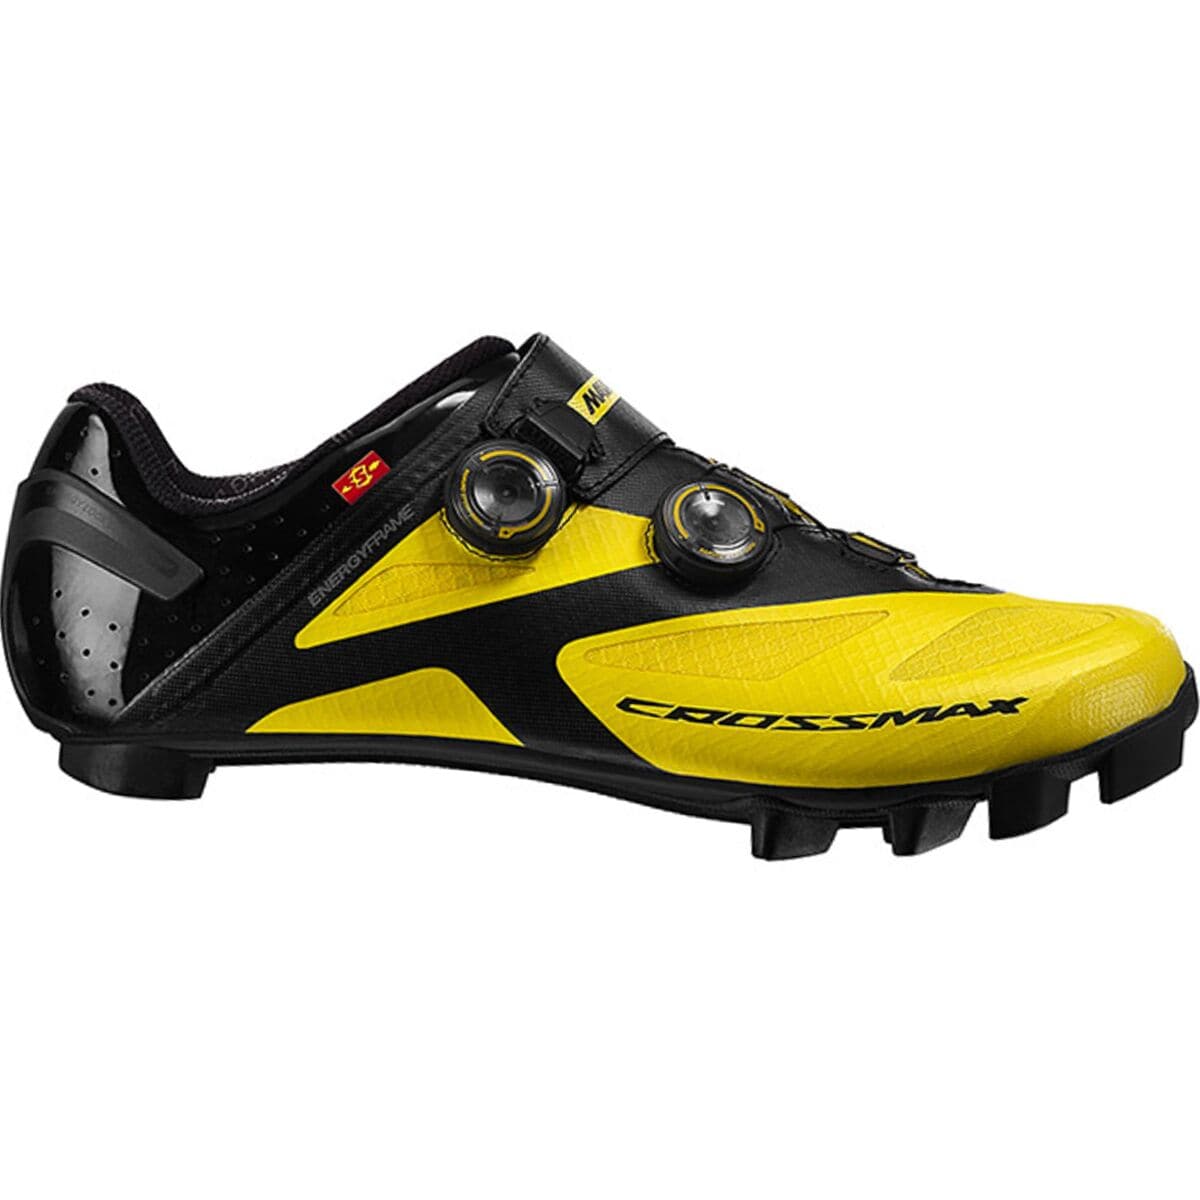 Mavic Crossmax SL Ultimate Cycling Shoe - Men's